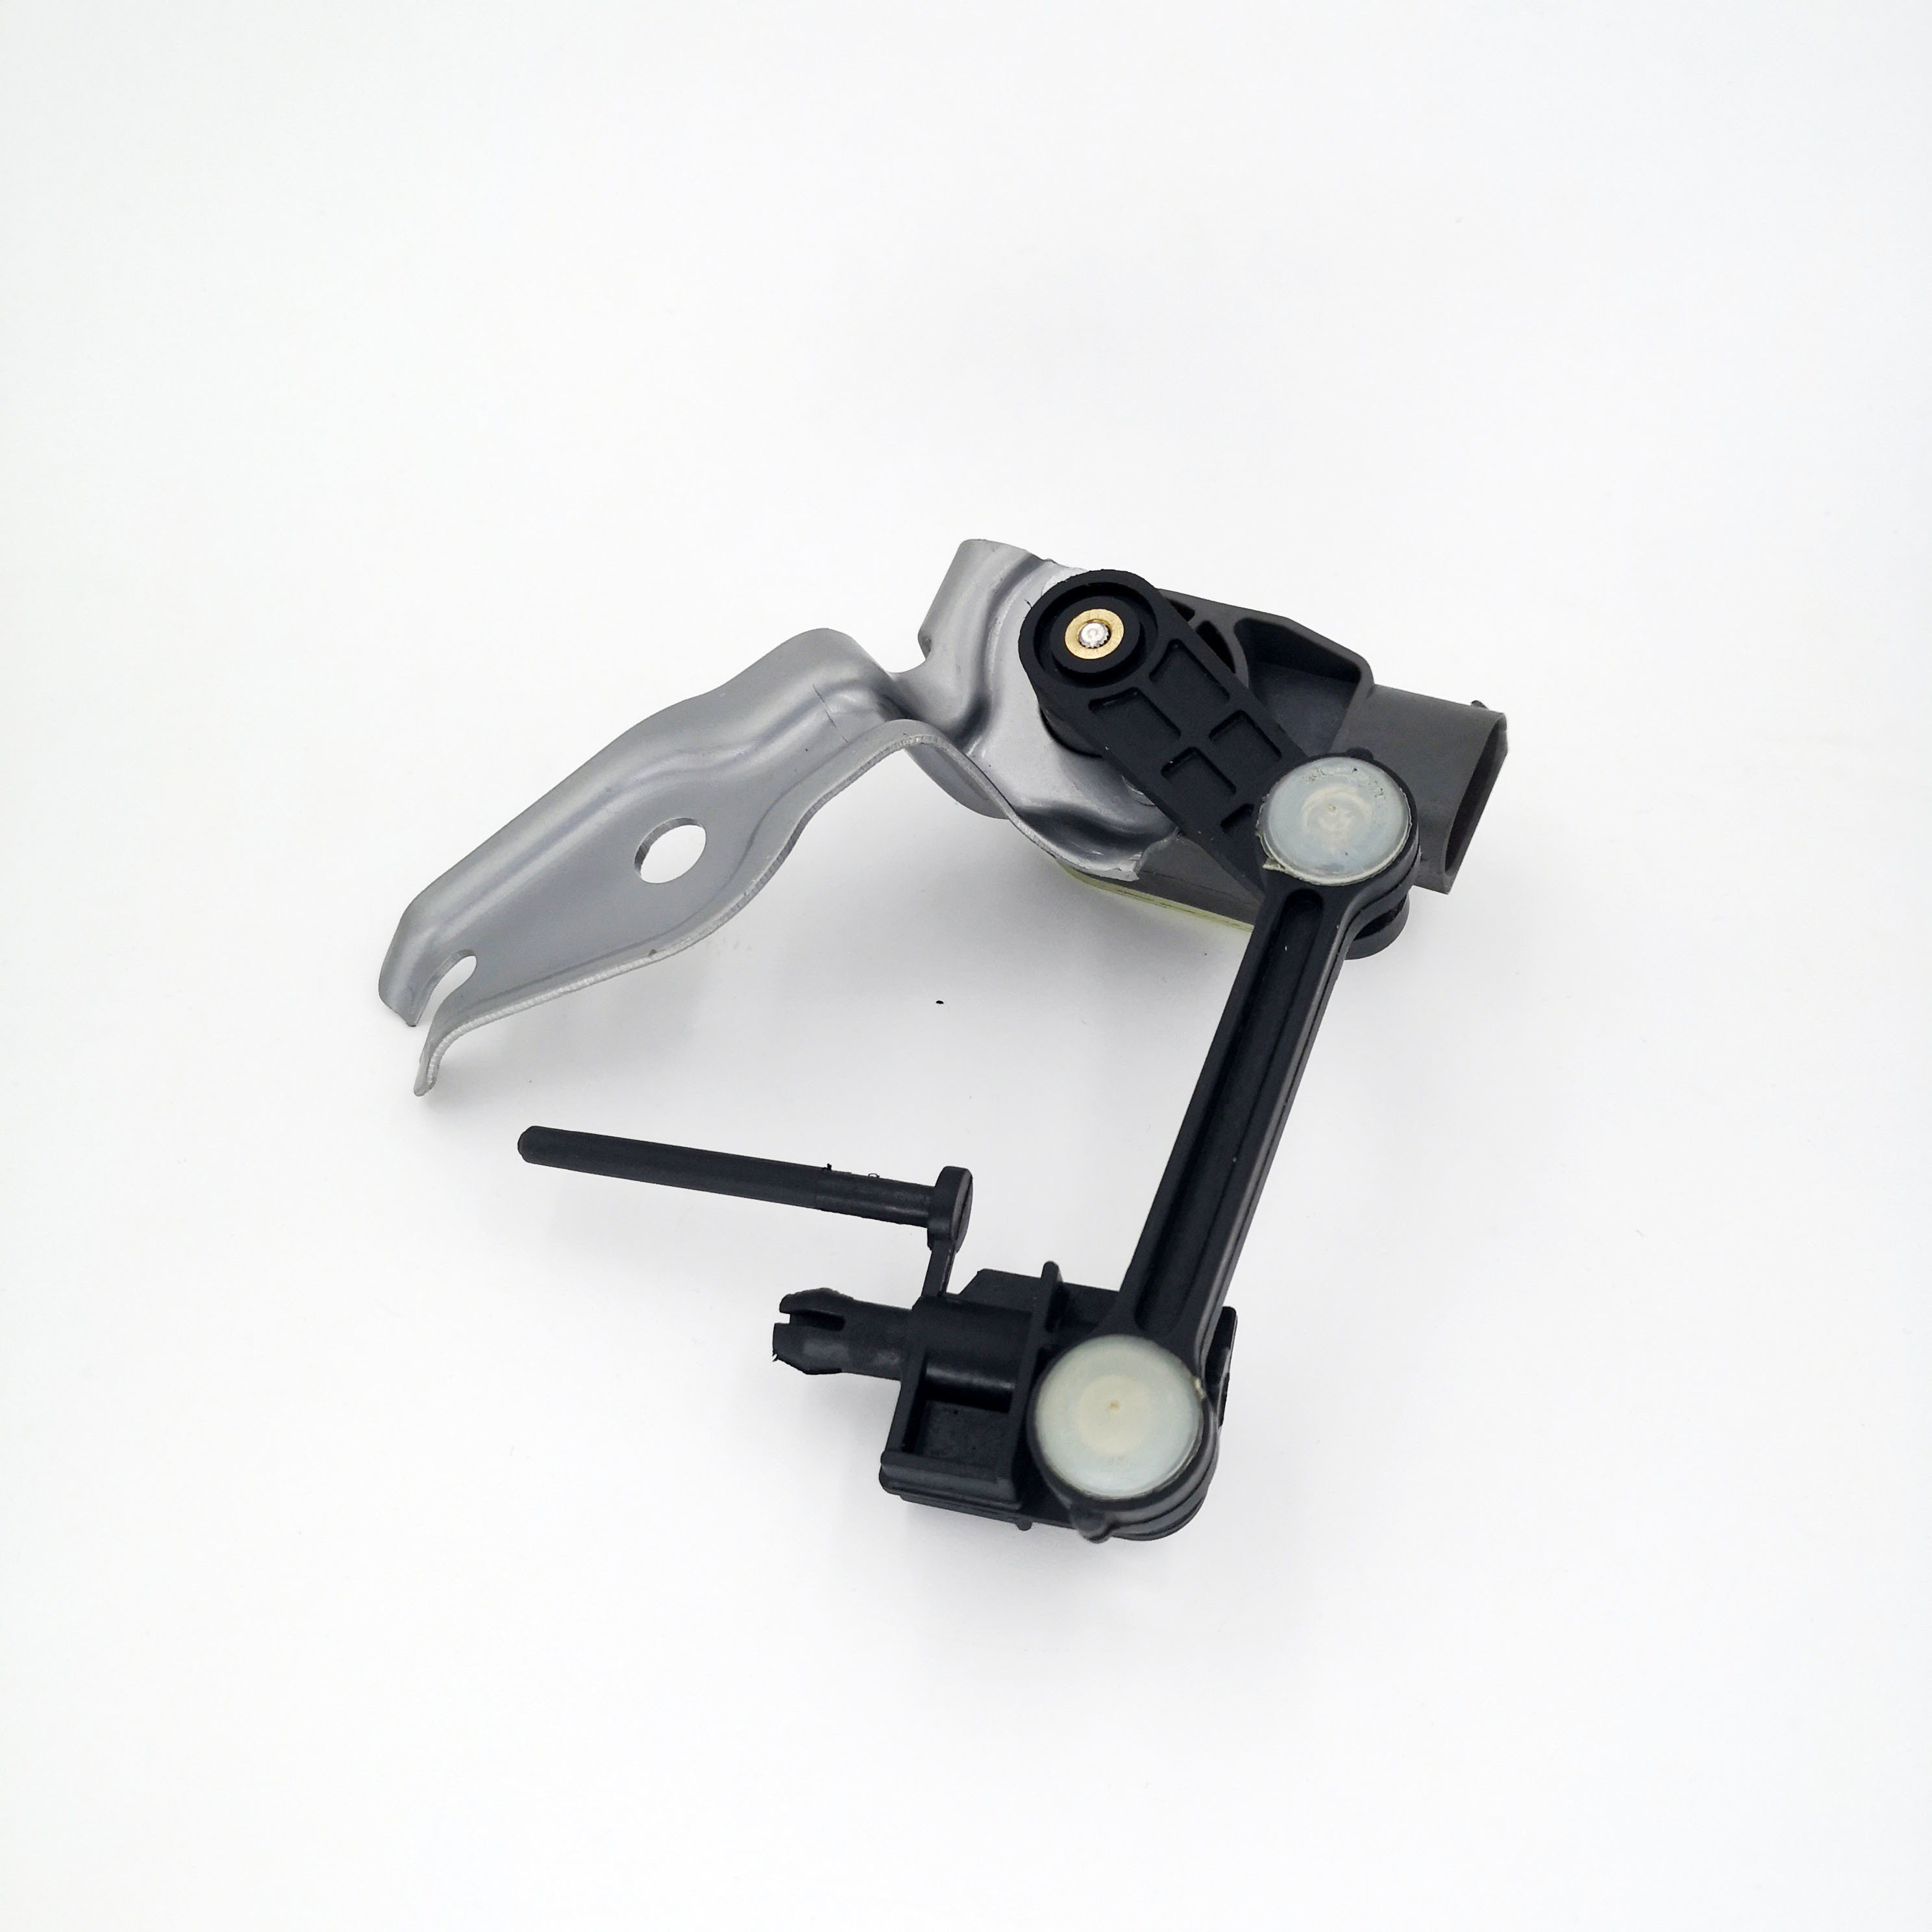 Headlight Level sensor Suspension height sensor for Audi Q7  Toureg 7L0616213D